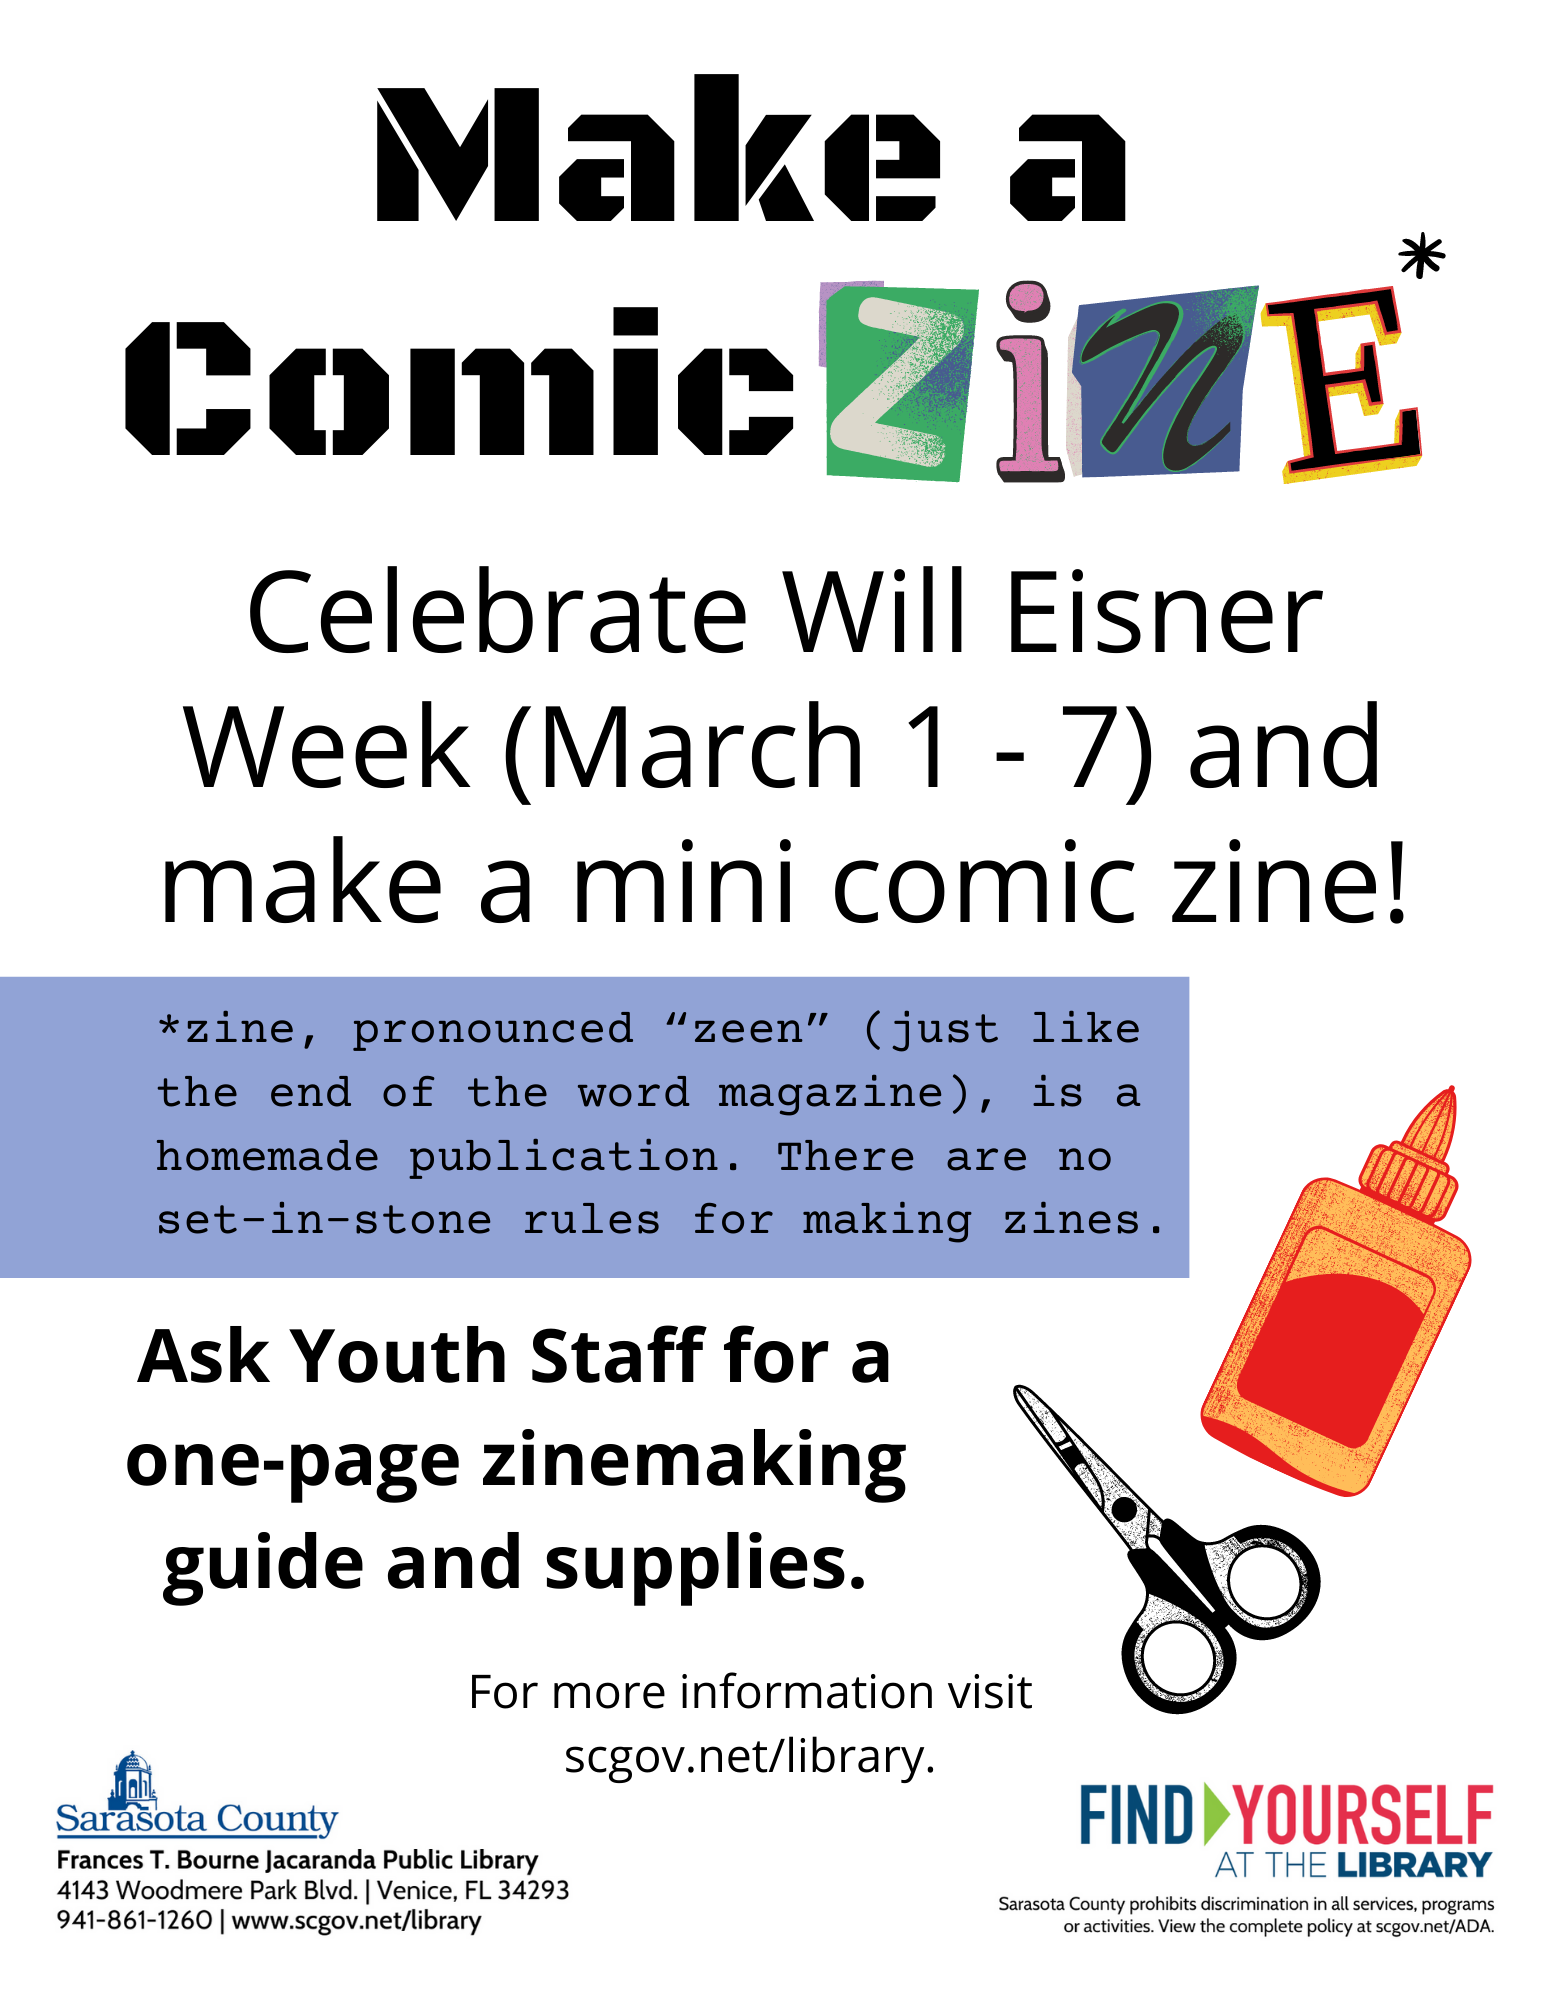 flyer advertising comic zine event